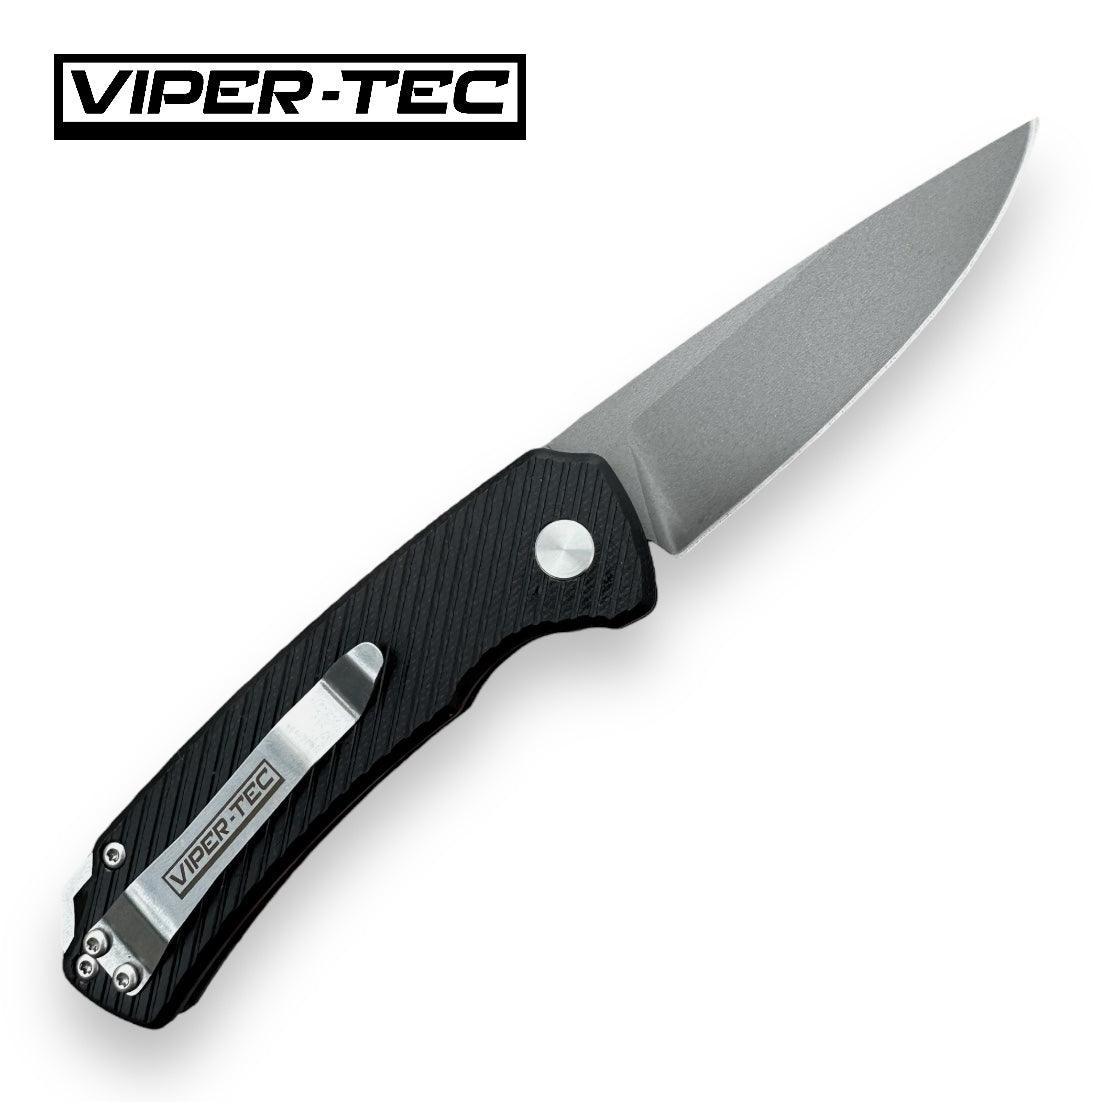 VT Cricket D2 Switchblade Knife